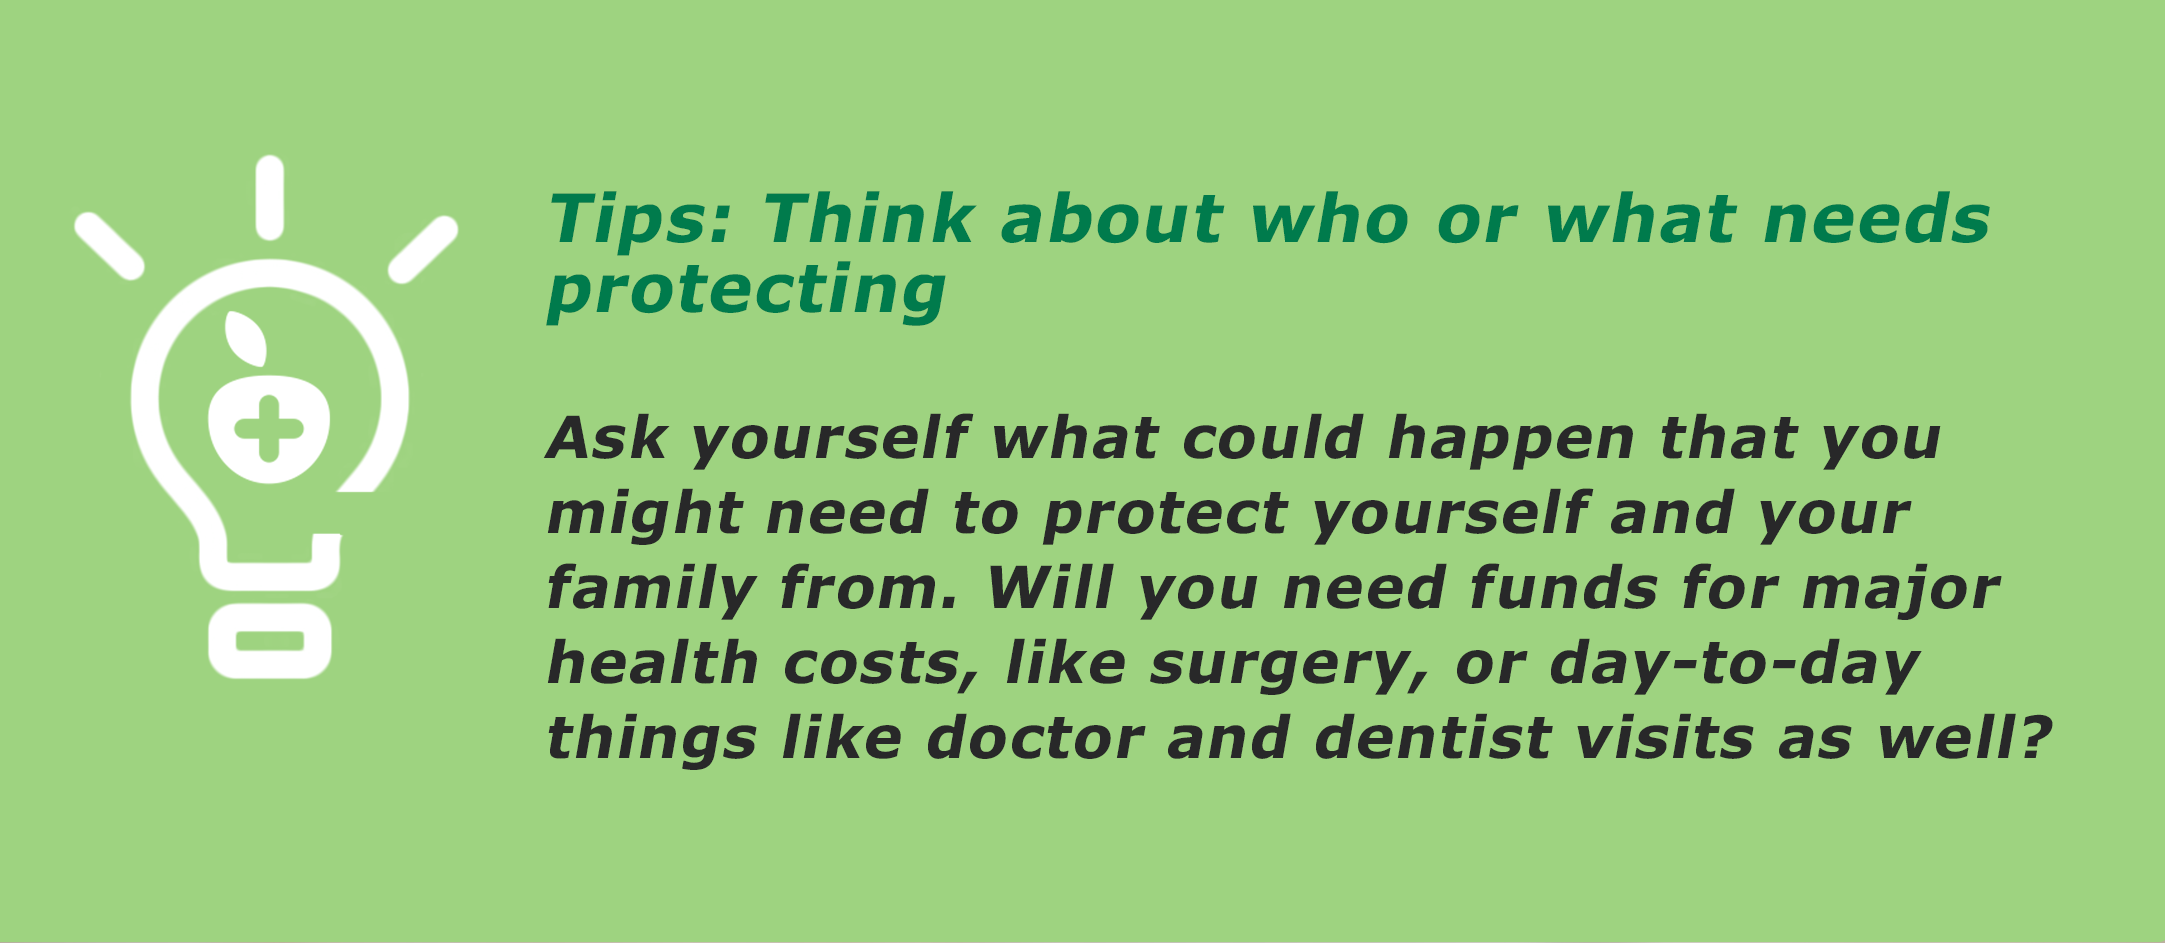 health insurance guide-tip2